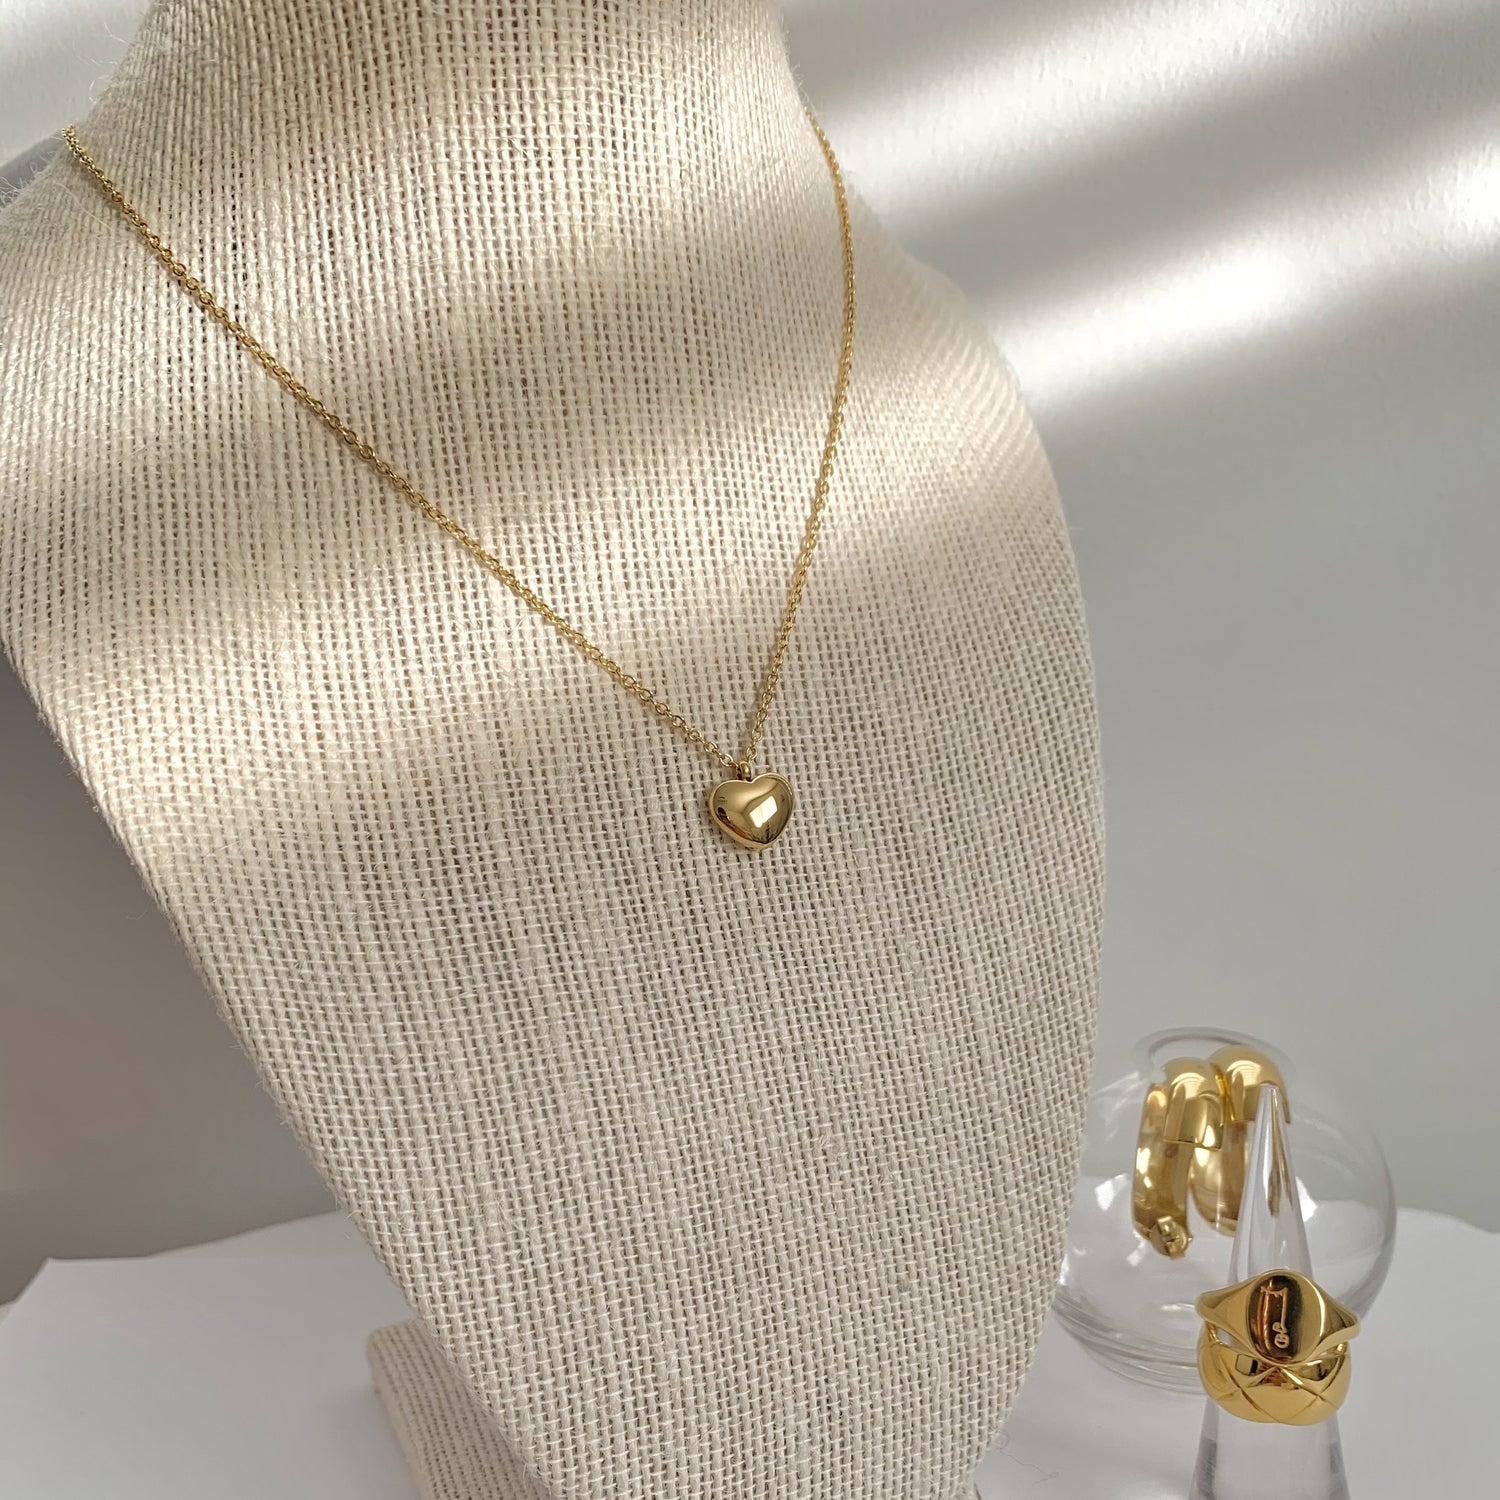 Hart aka Heart Necklace - Namaste Jewelry Canada